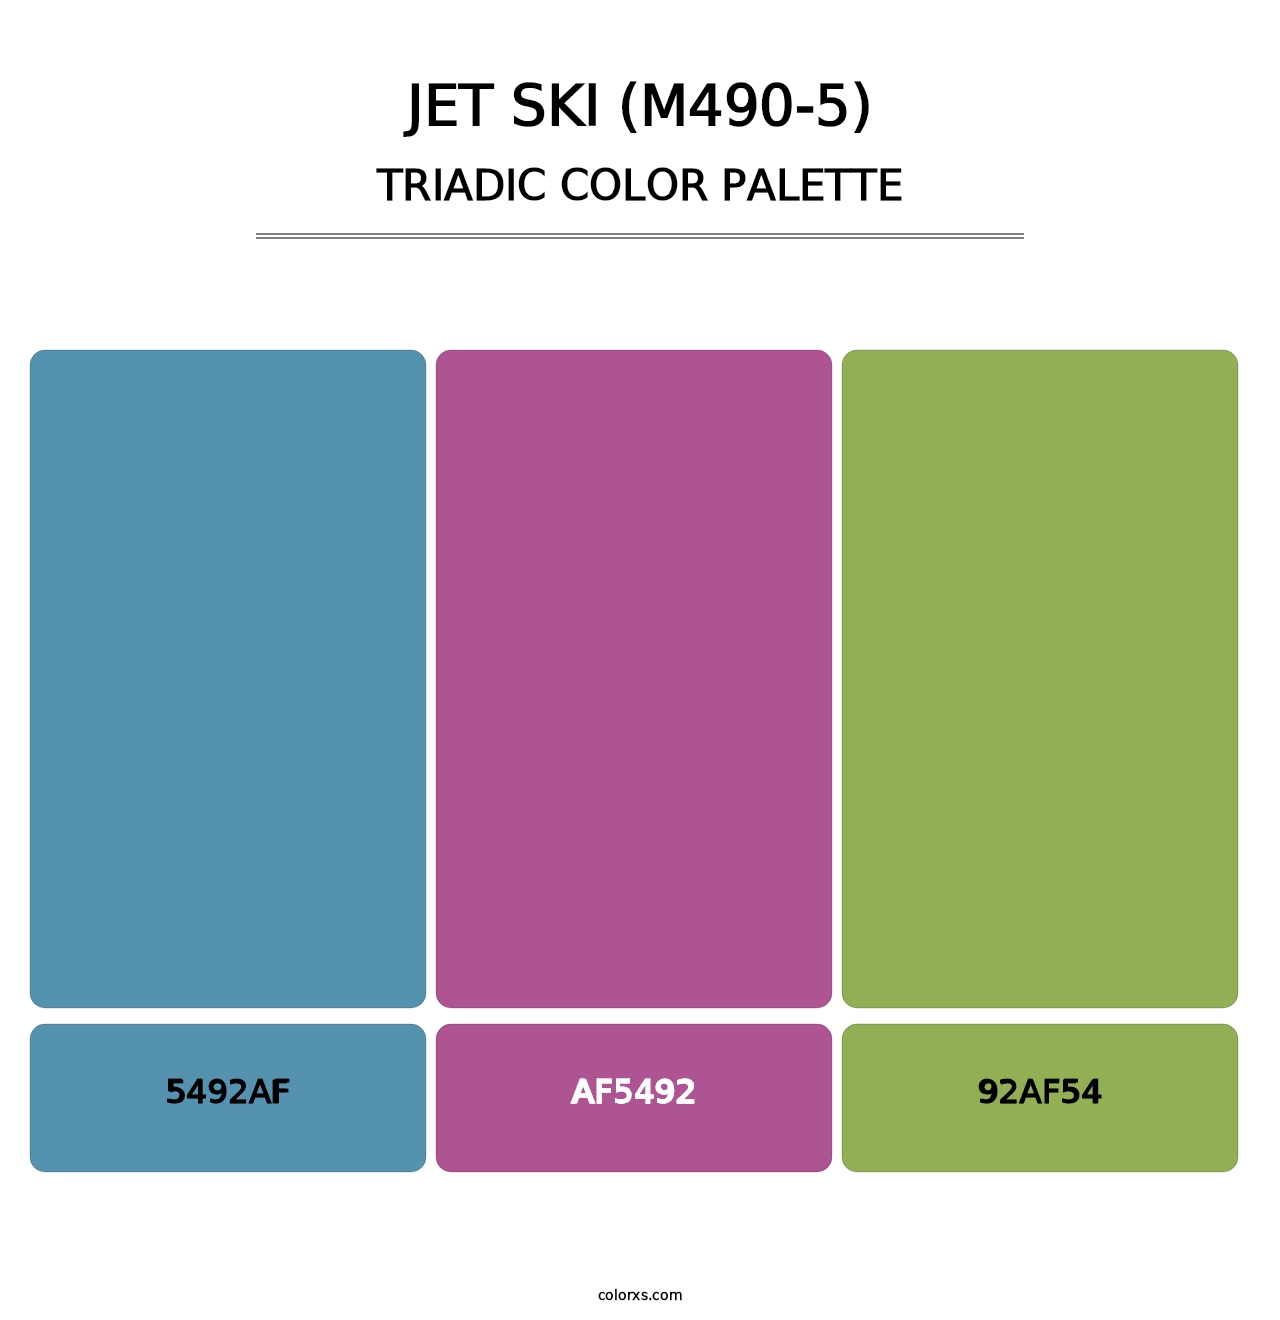 Jet Ski (M490-5) - Triadic Color Palette